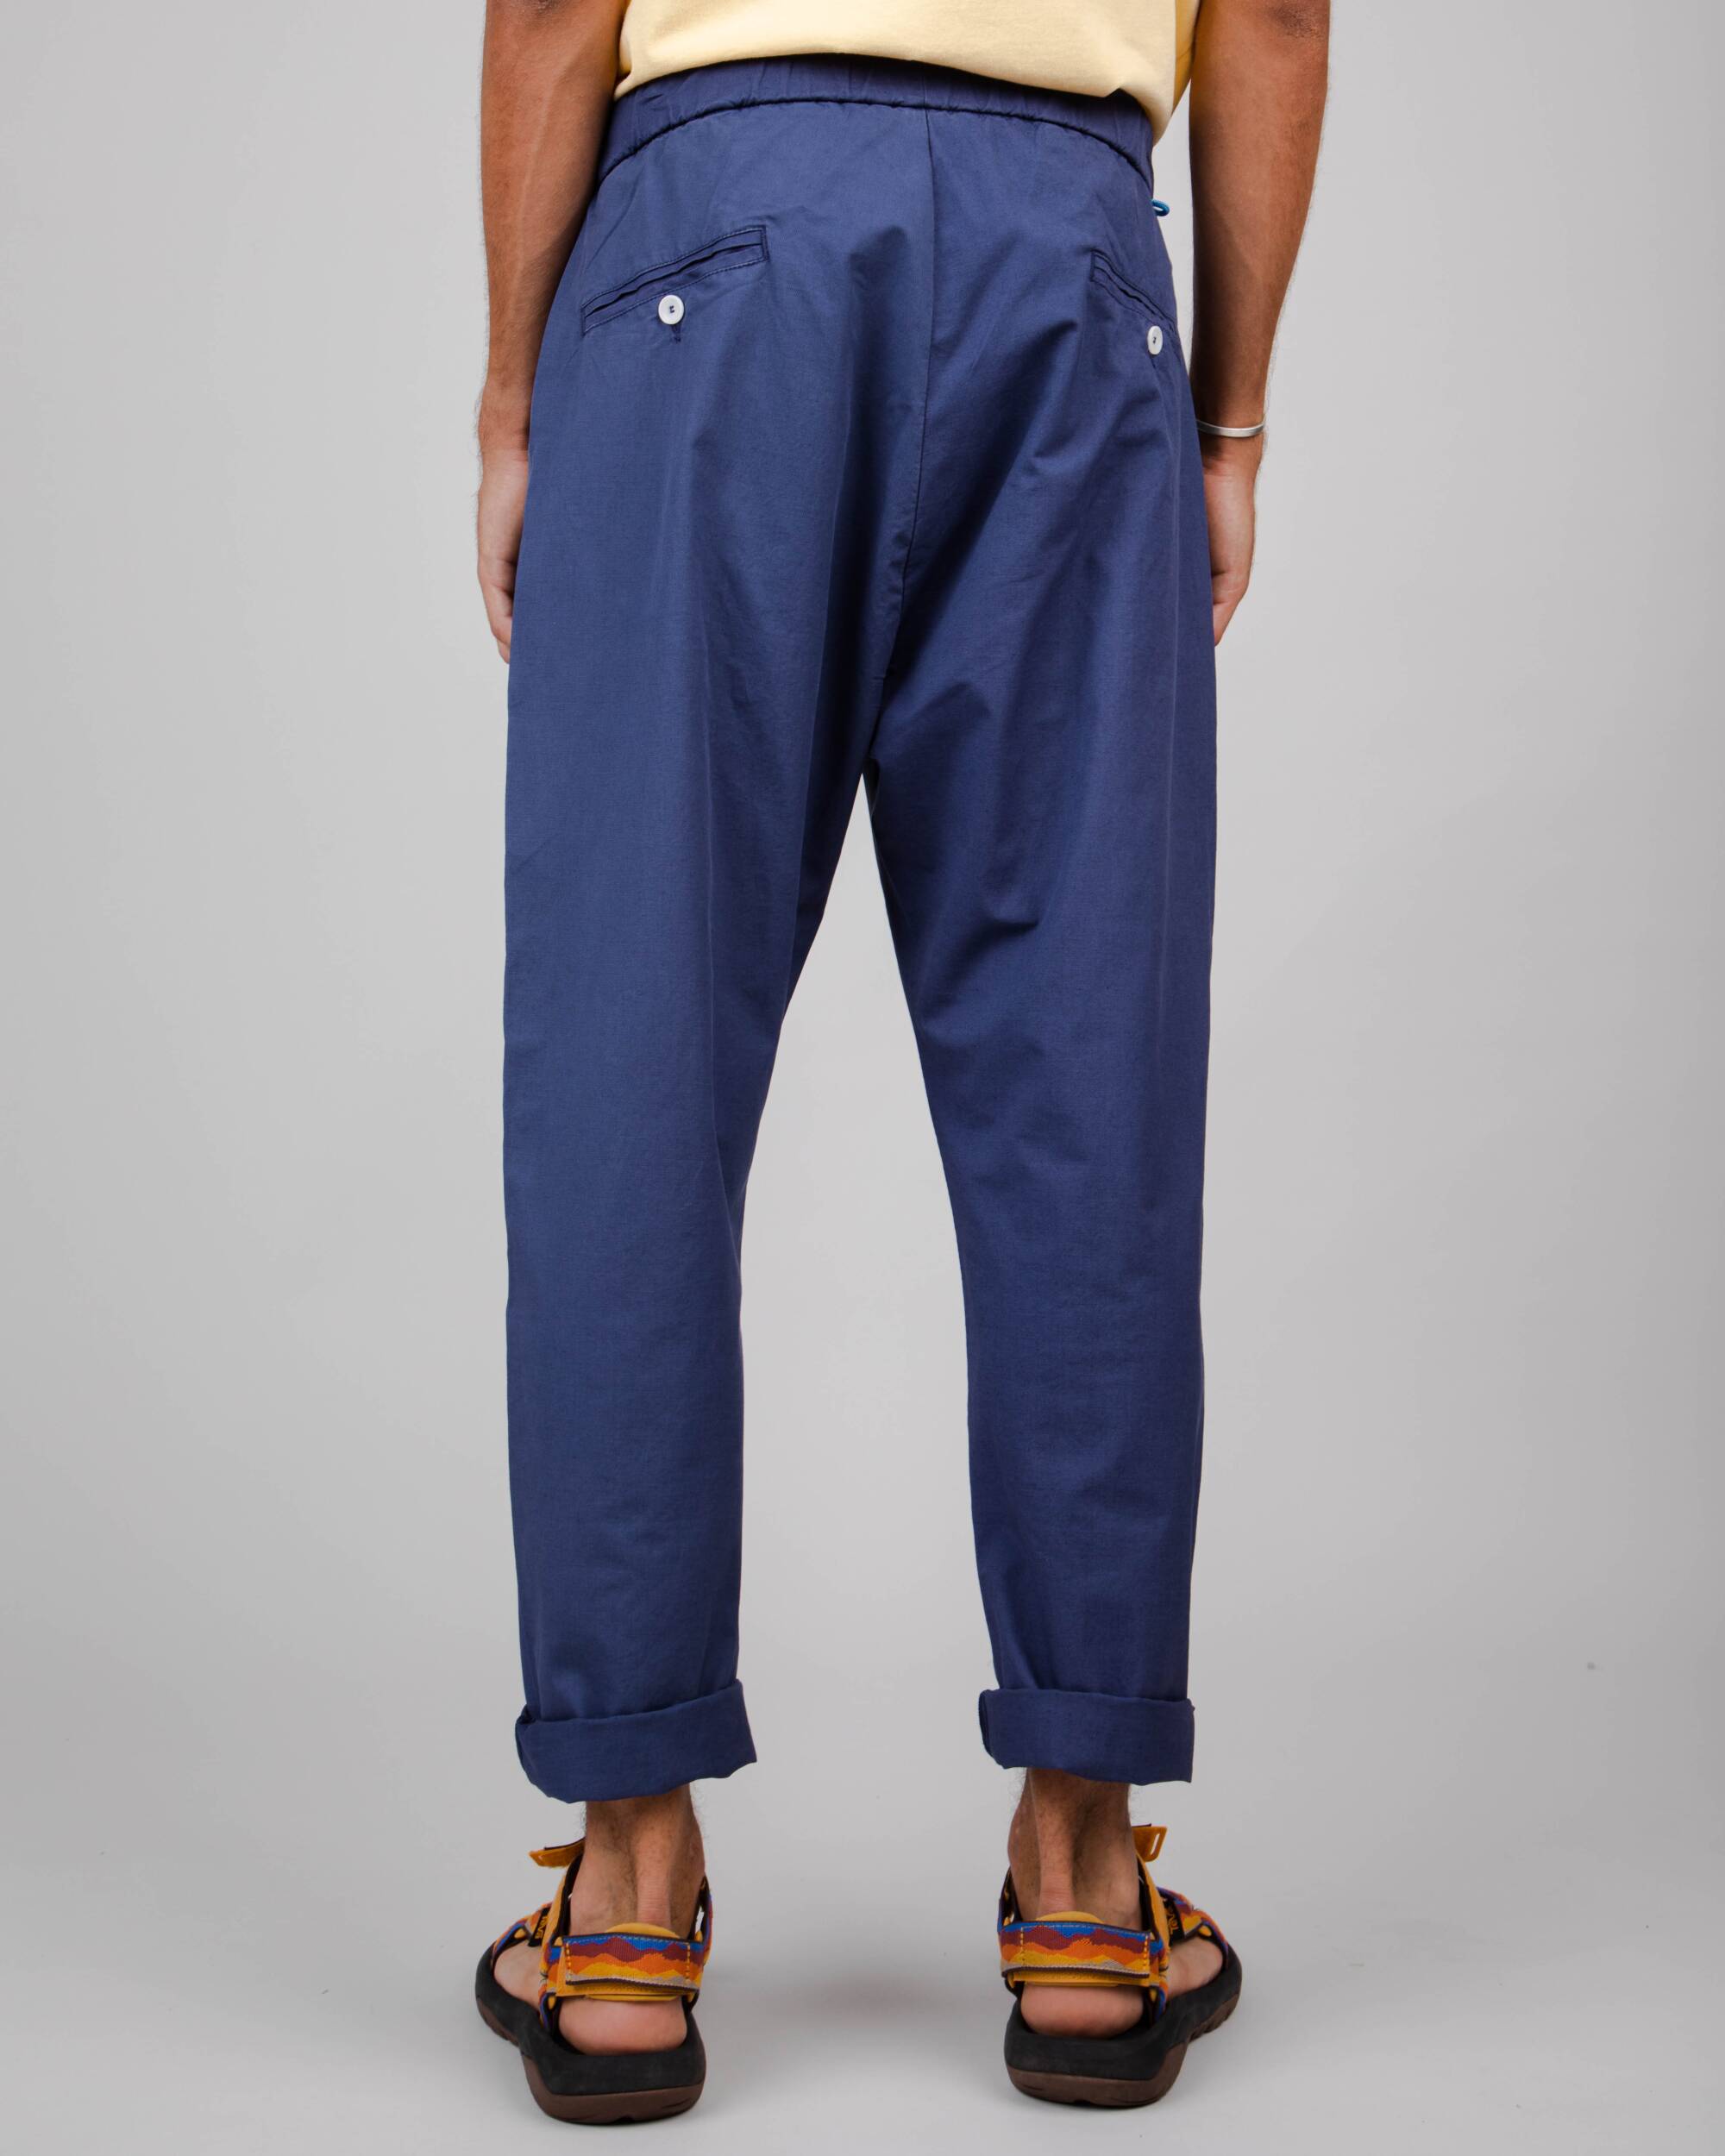 Dark blue oversized trousers made of organic cotton from Brava Fabrics